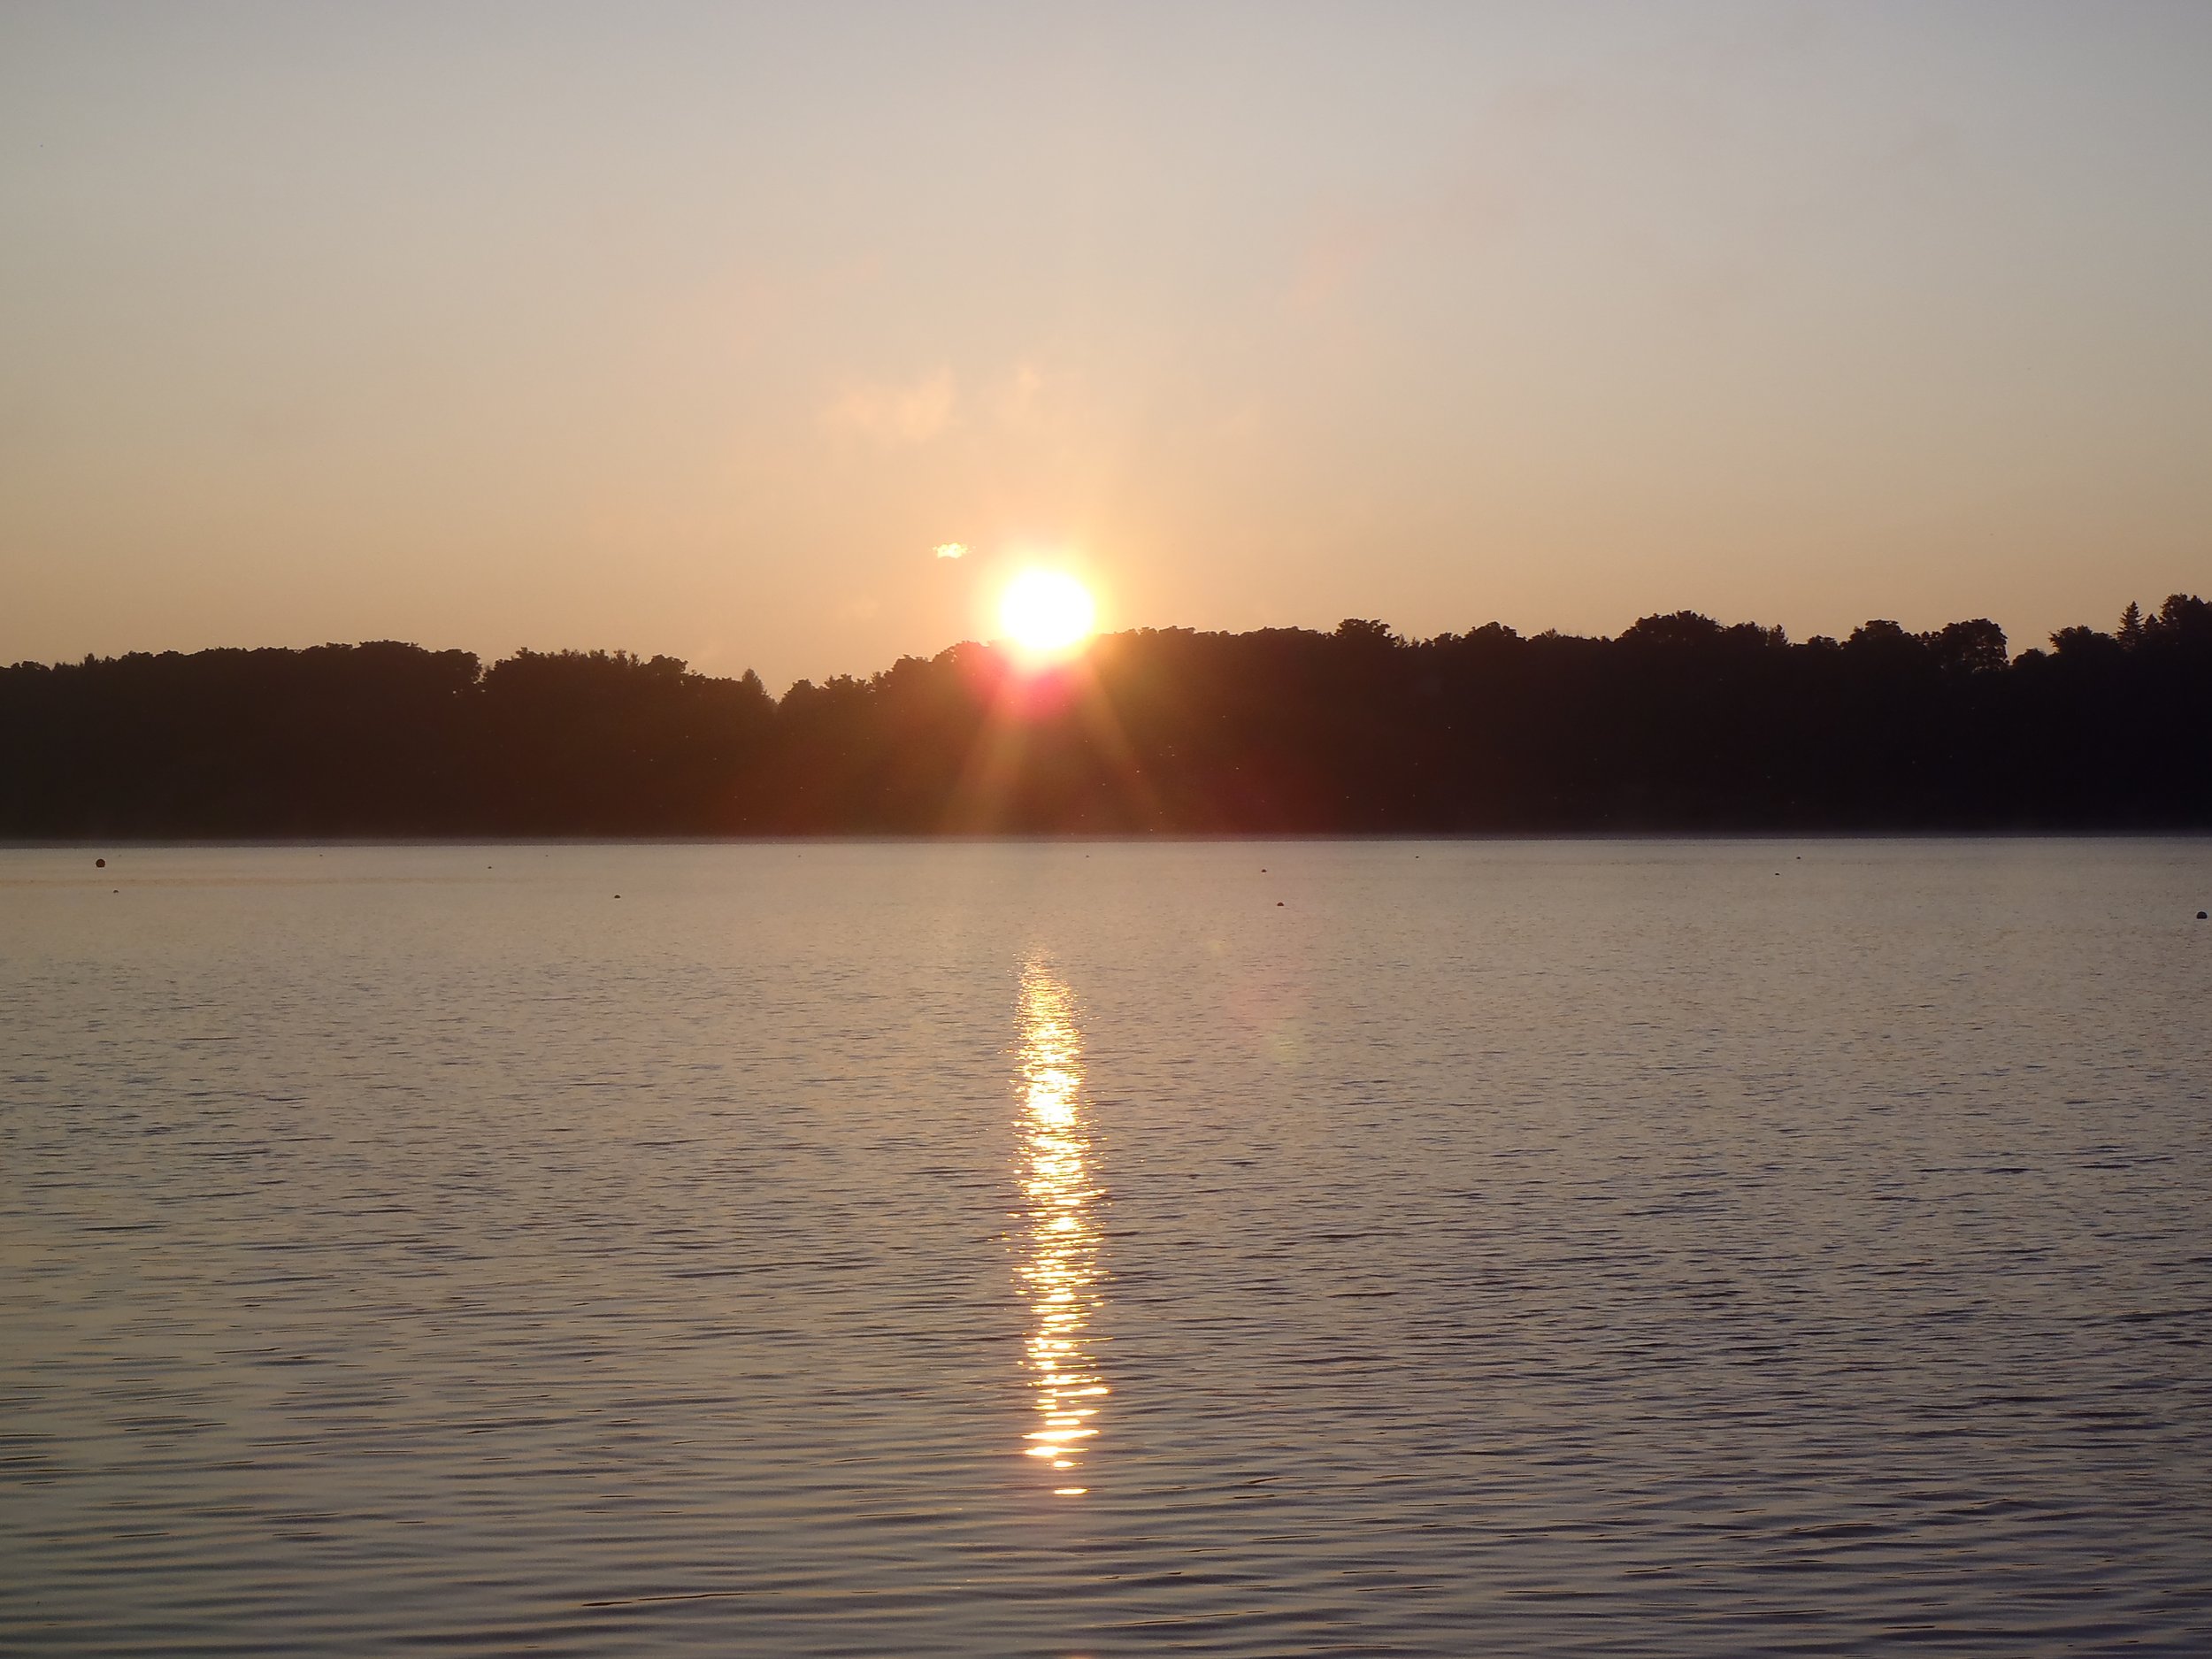 "The sunsetting on Fanshawe Lake at Fanshawe Lake Conservation Area."